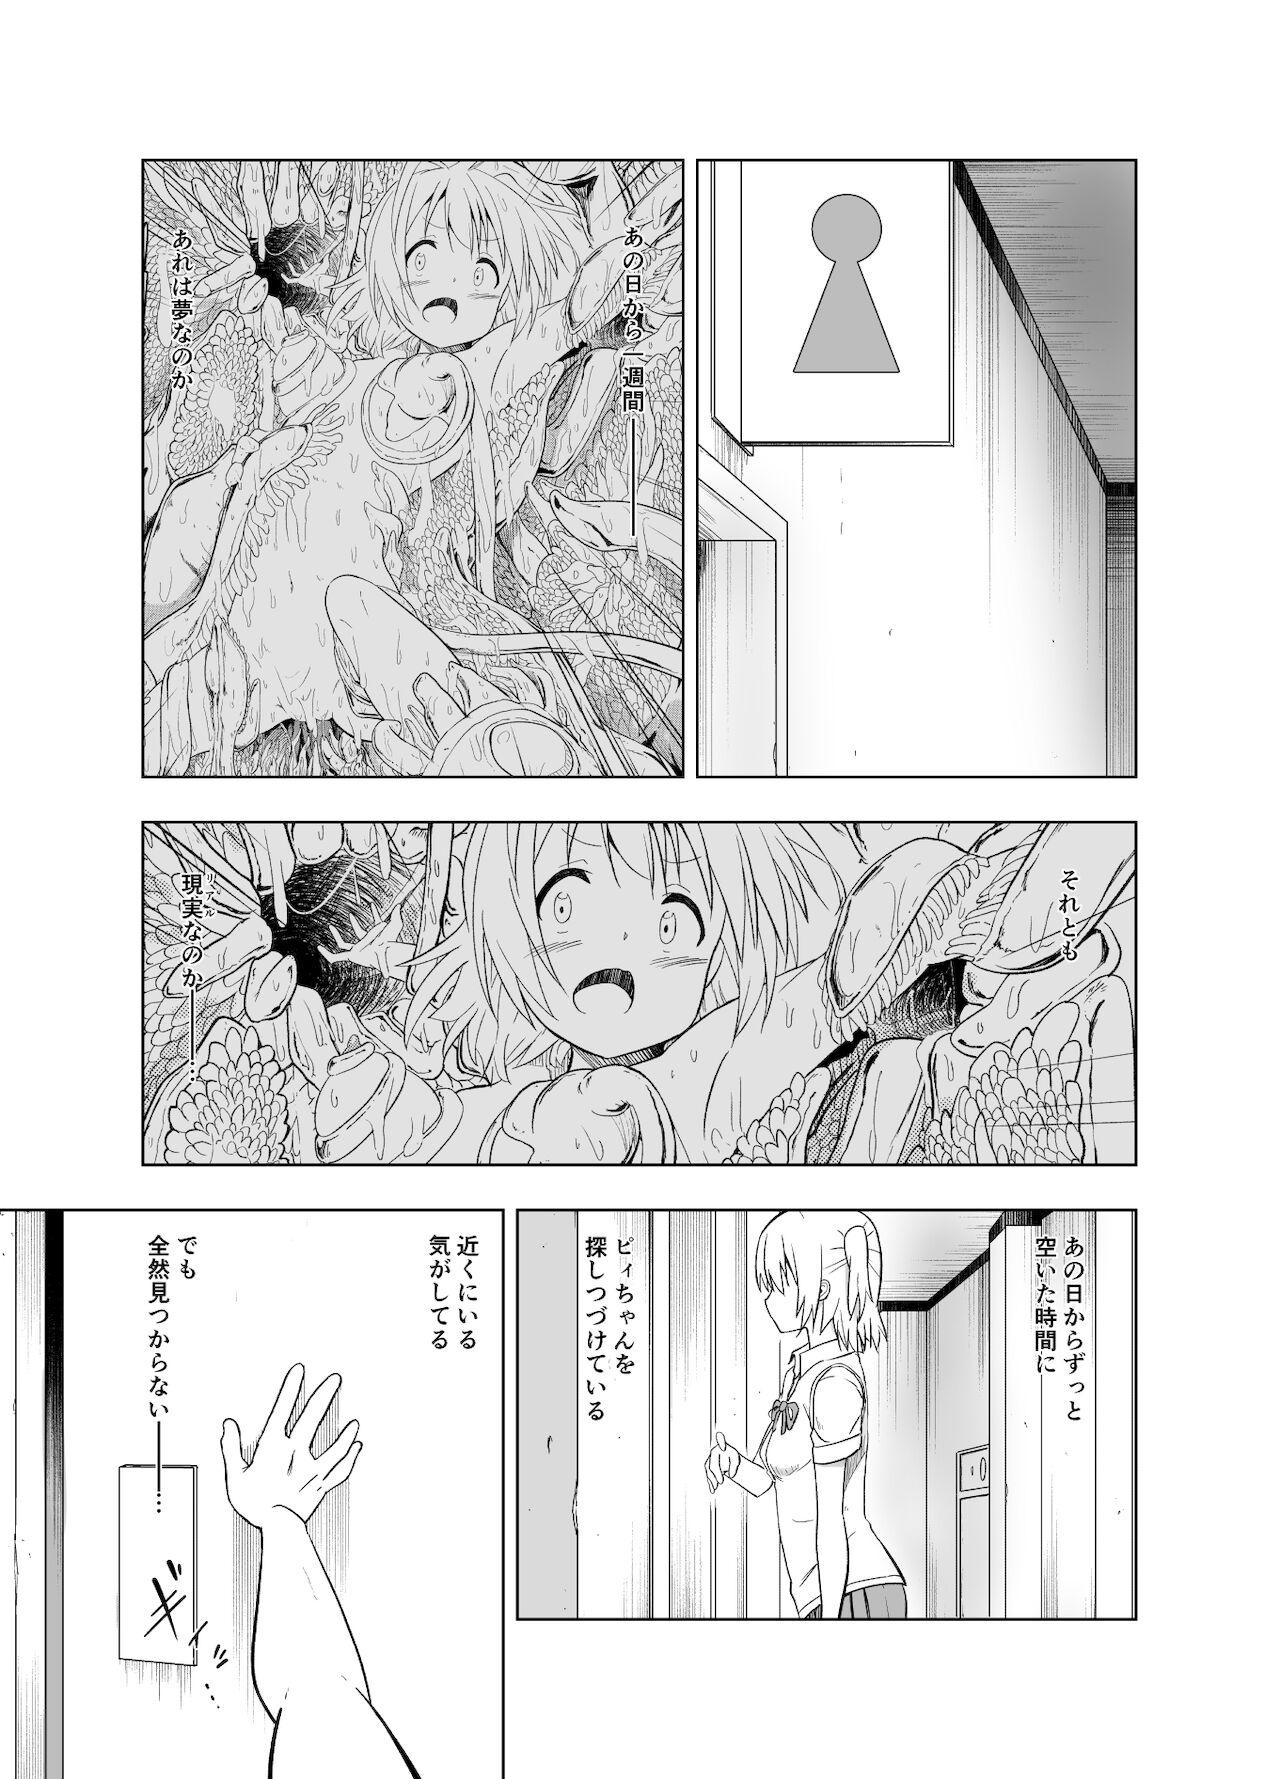 First みらいいろ〜チガウいろ〜 - Original Smooth - Page 3